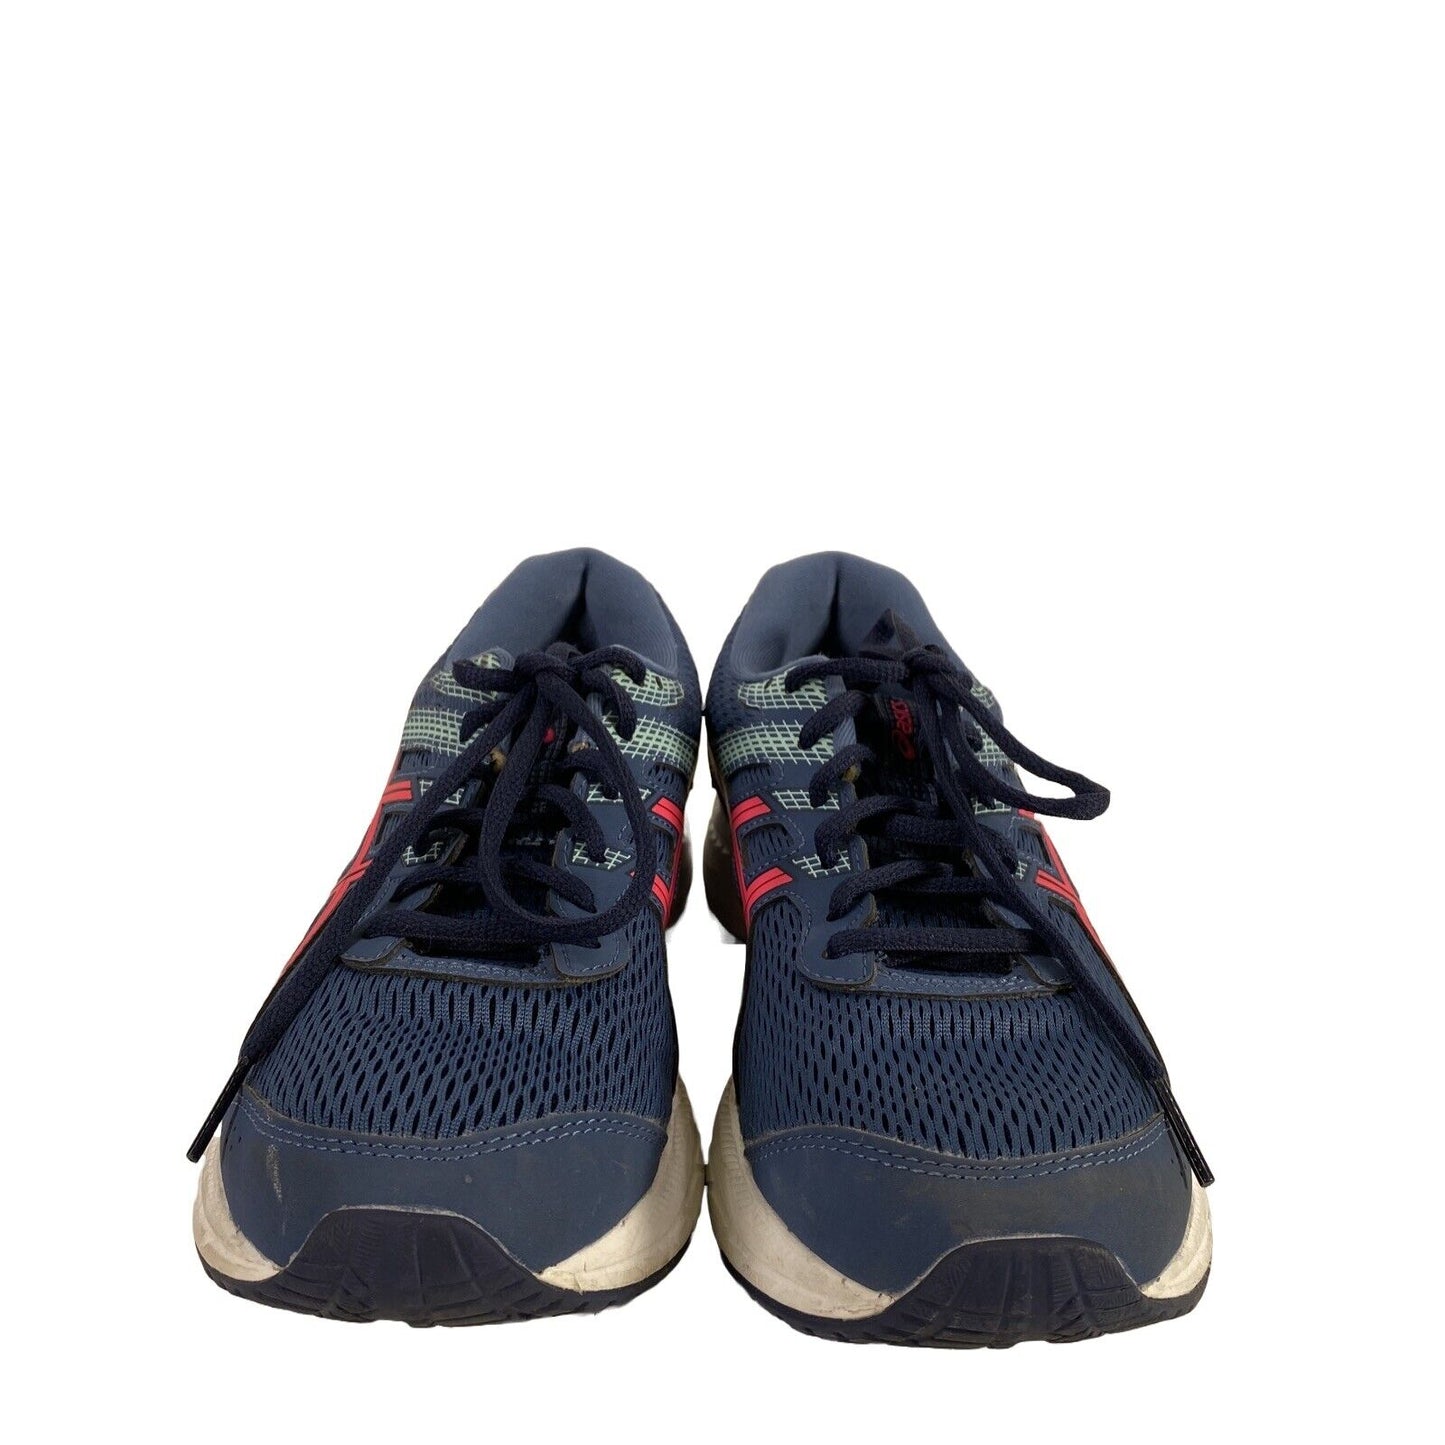 Asics Women's Blue Gel-Contend 6 Lace Up Athletic Shoes - 8